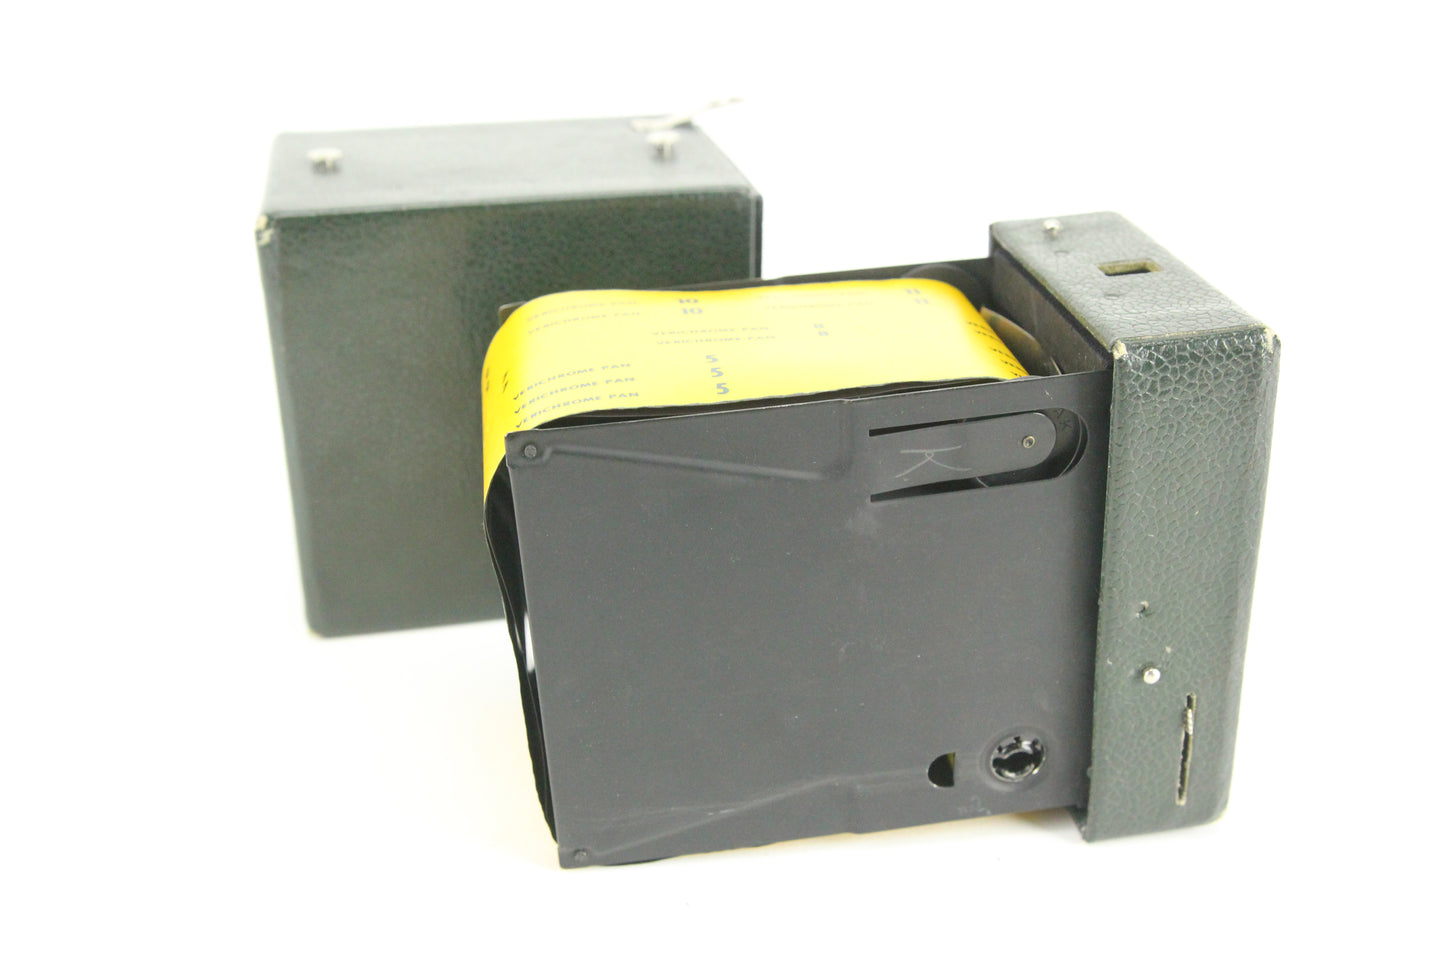 Eastman Kodak Rainbow Hawk-Eye No. 2 Box Camera (Green Color)